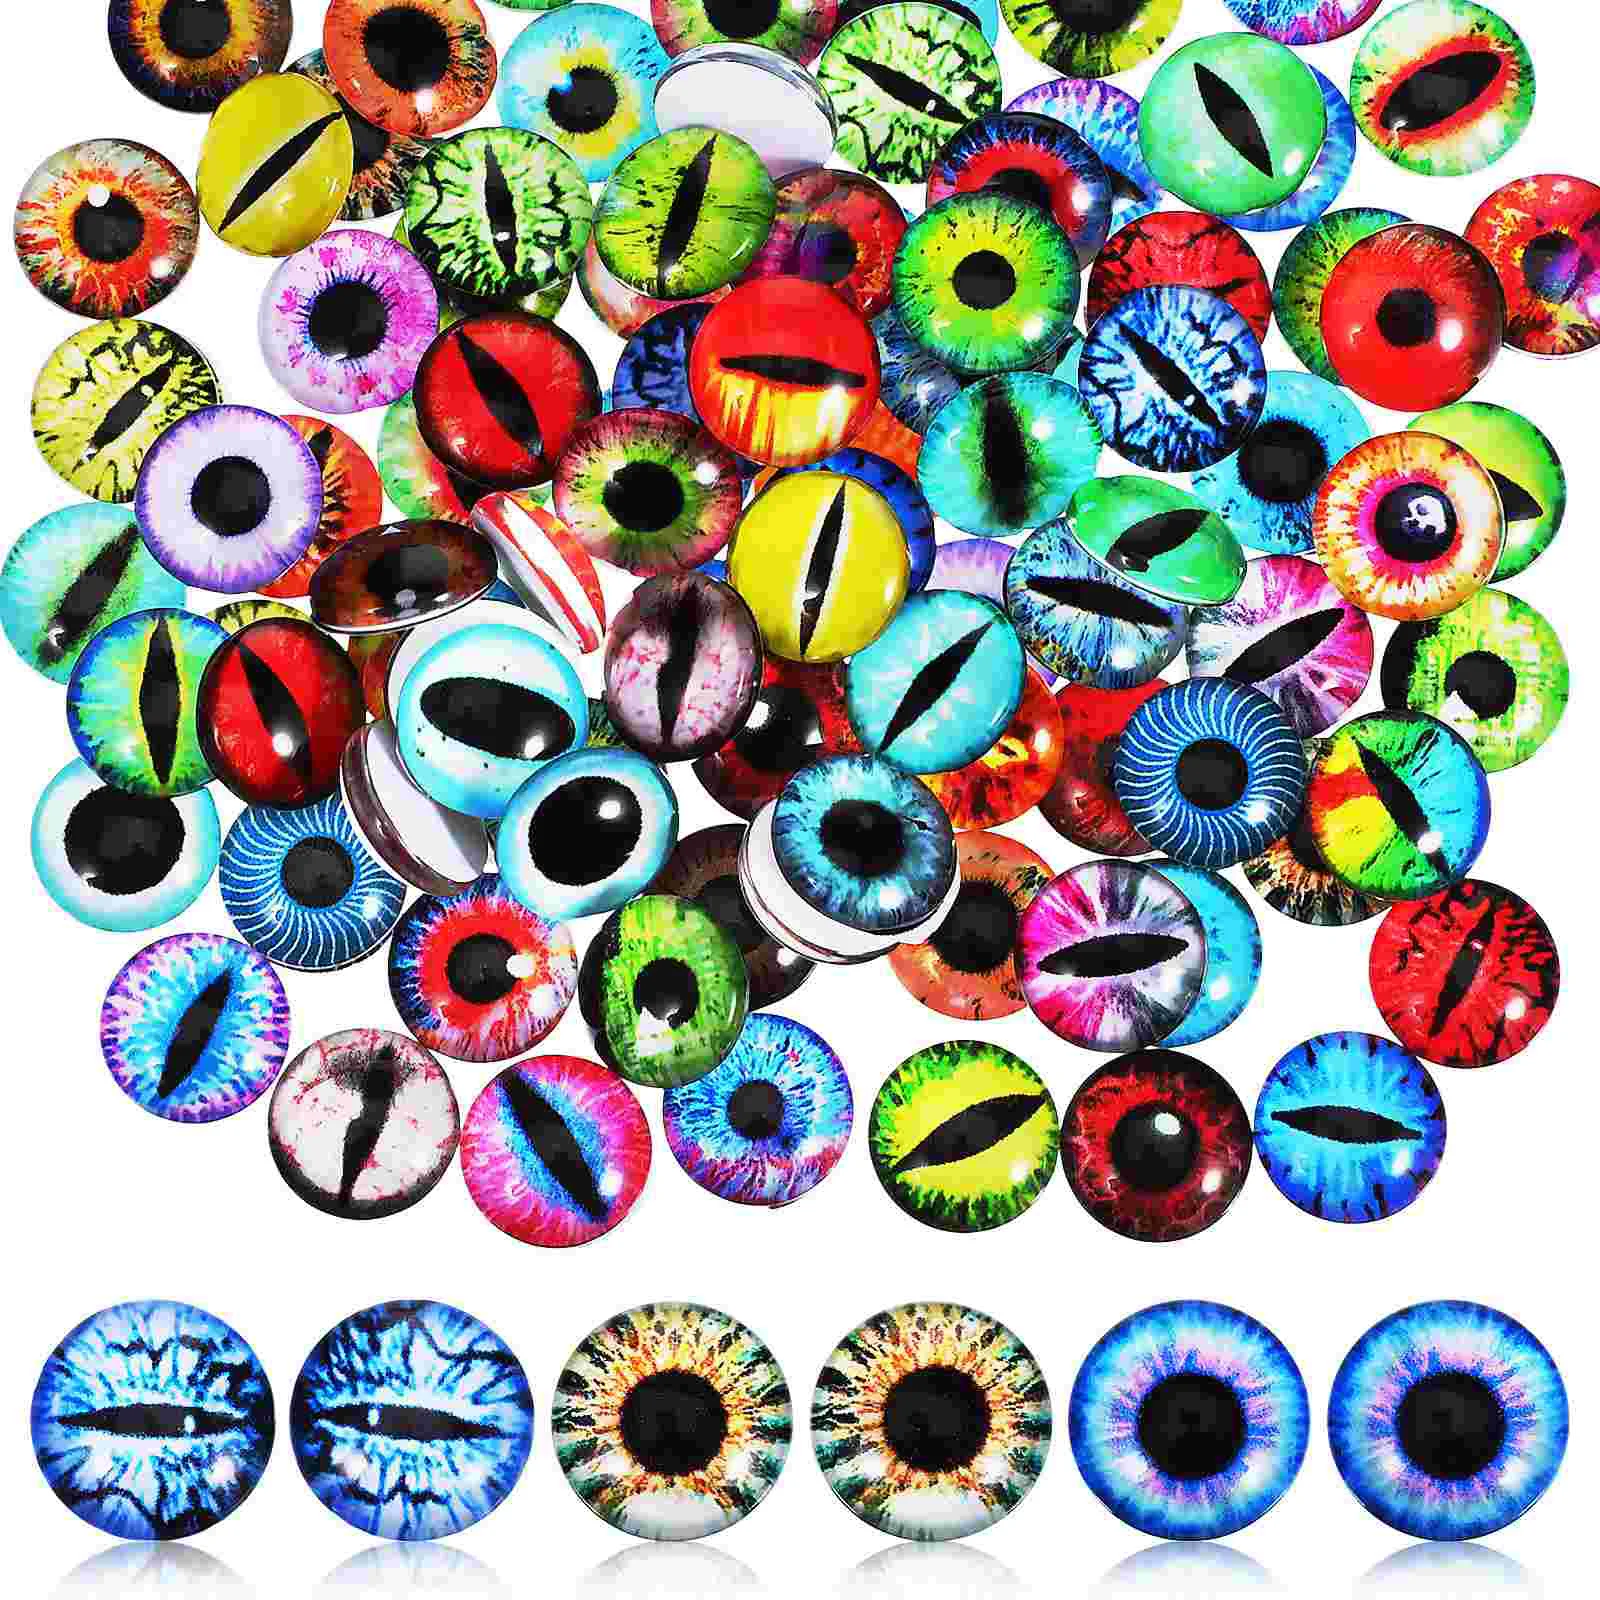 

100 Pcs Glass Eyes Eyes Animal Eyes Craft Eyes Stuffed Animal Eyes Craft Eyeballs For Crochet Animals